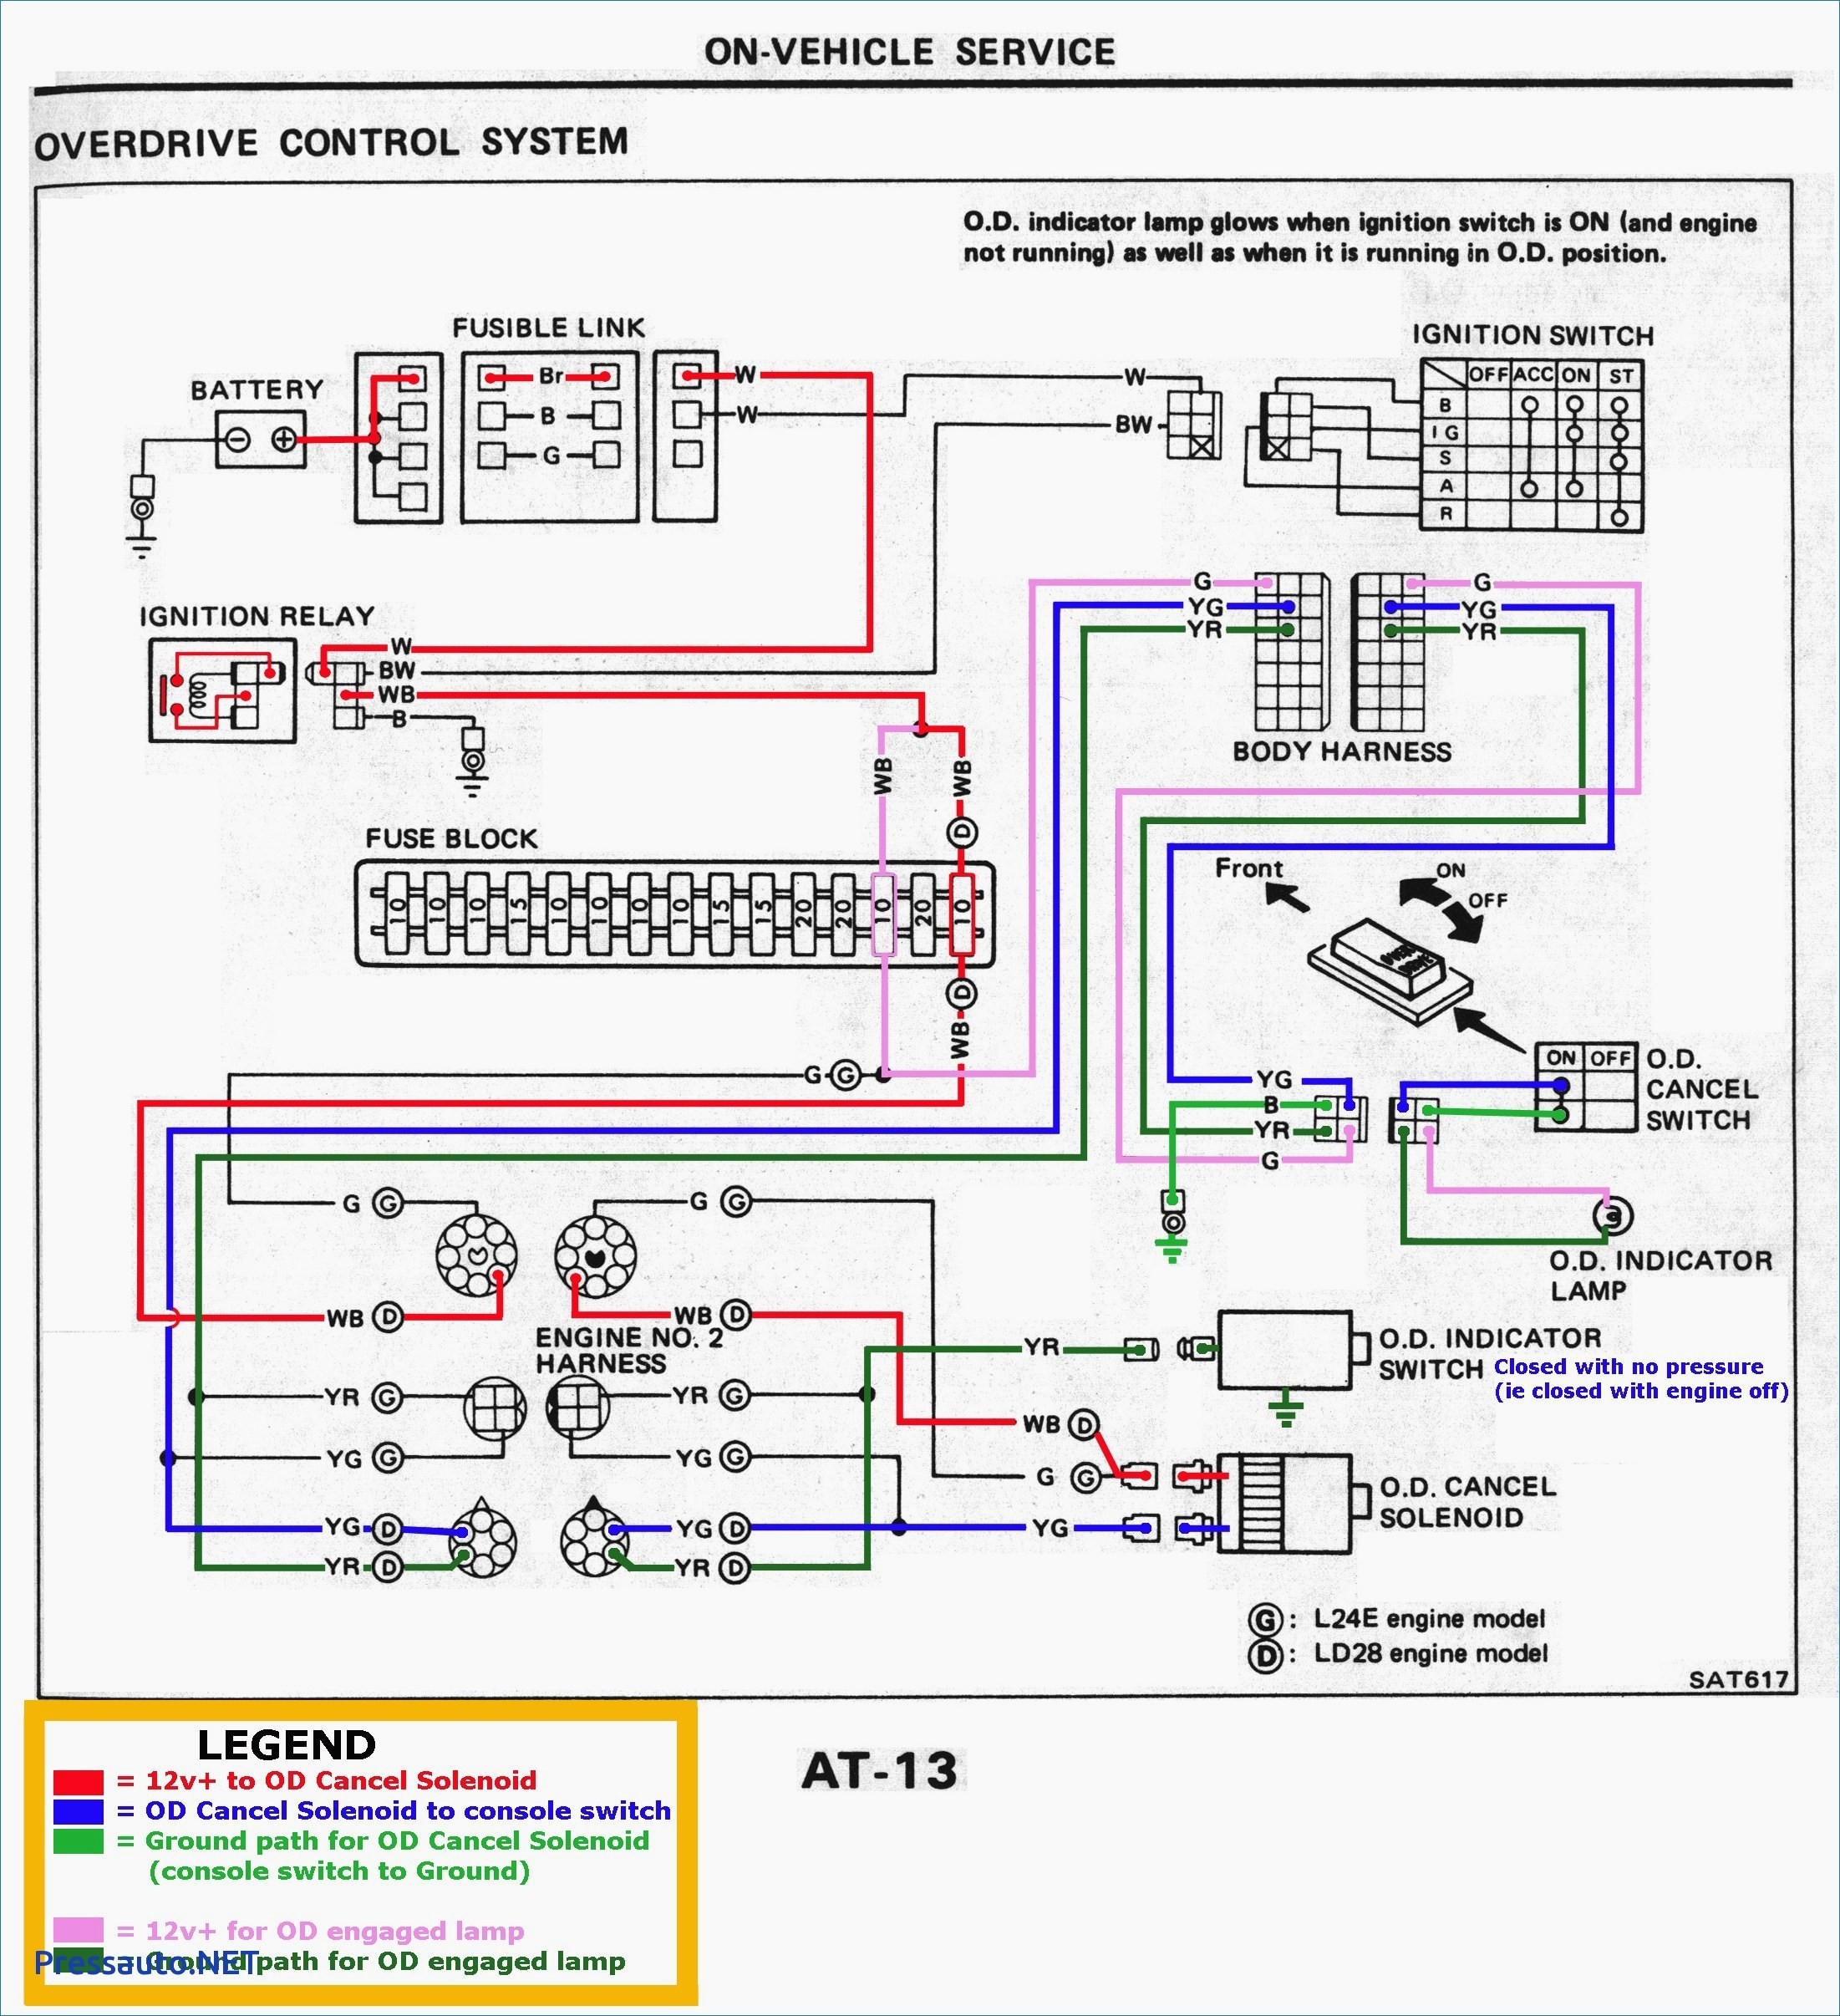 Free Automotive Wiring Diagrams Automotive Wiring Diagram Line Fresh Free Vehicle Wiring Diagrams Fresh Magnificent